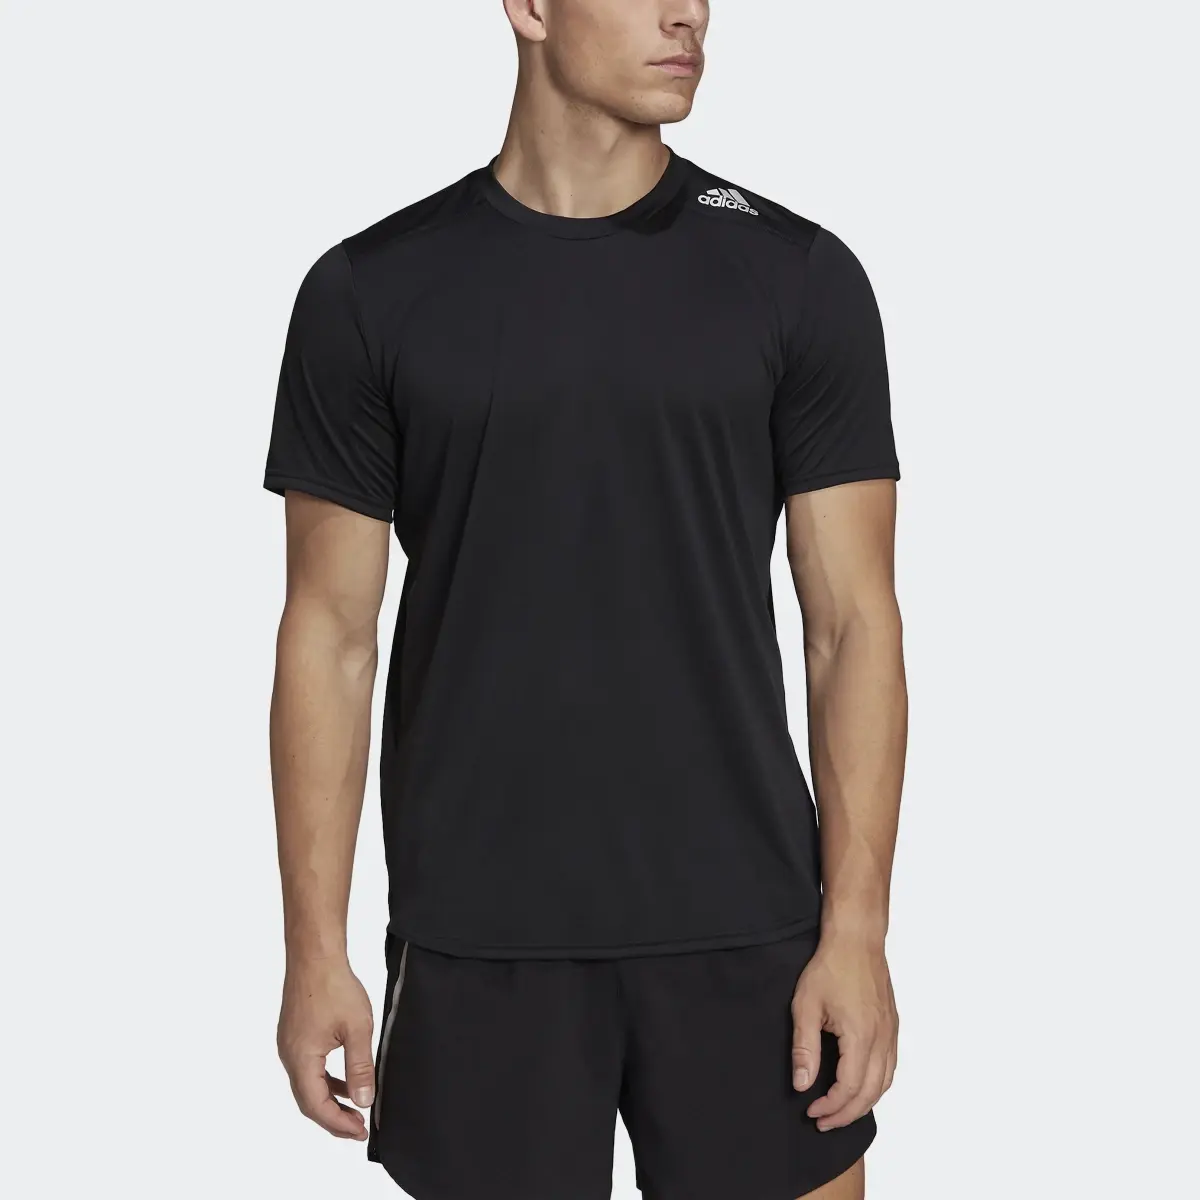 Adidas T-shirt Designed 4 Running. 1